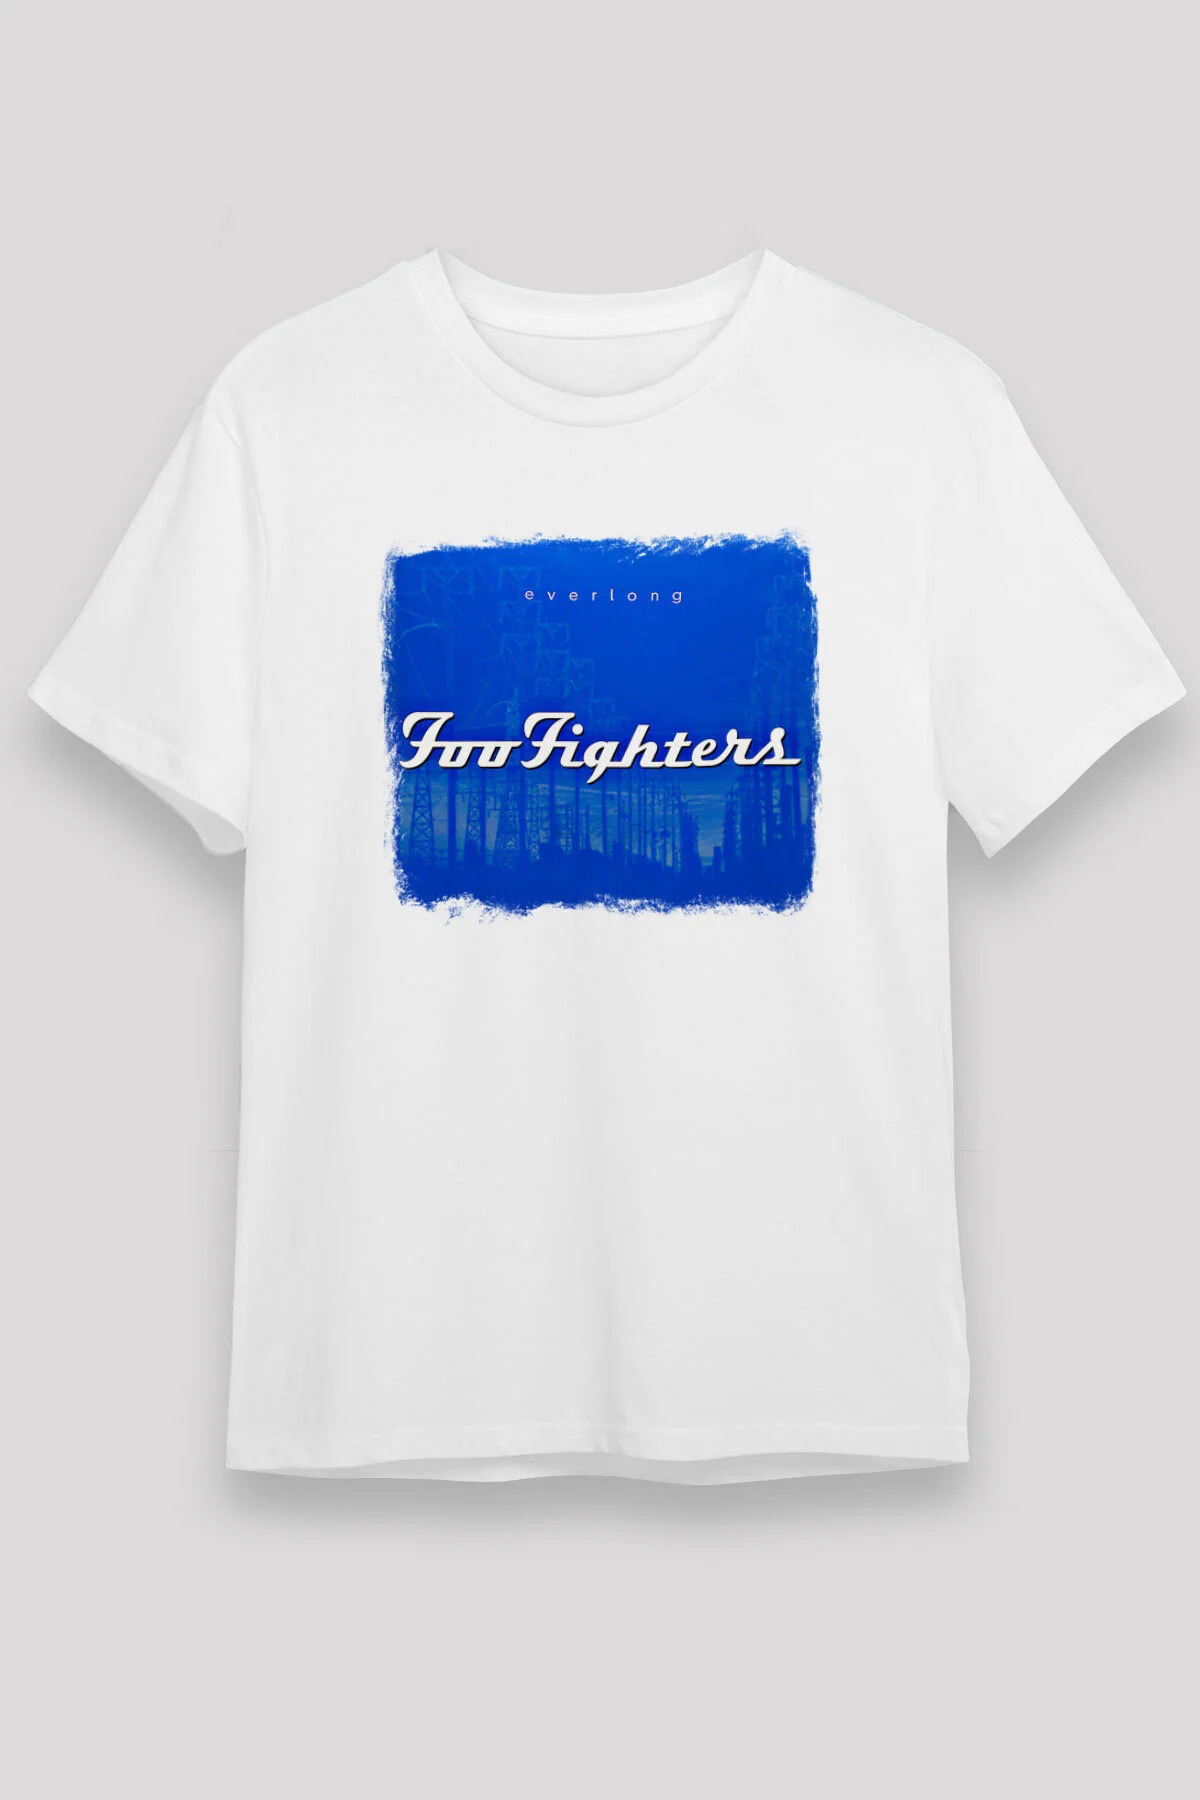 Foo Fighters  T shirt , Music Band ,Unisex Tshirt 15